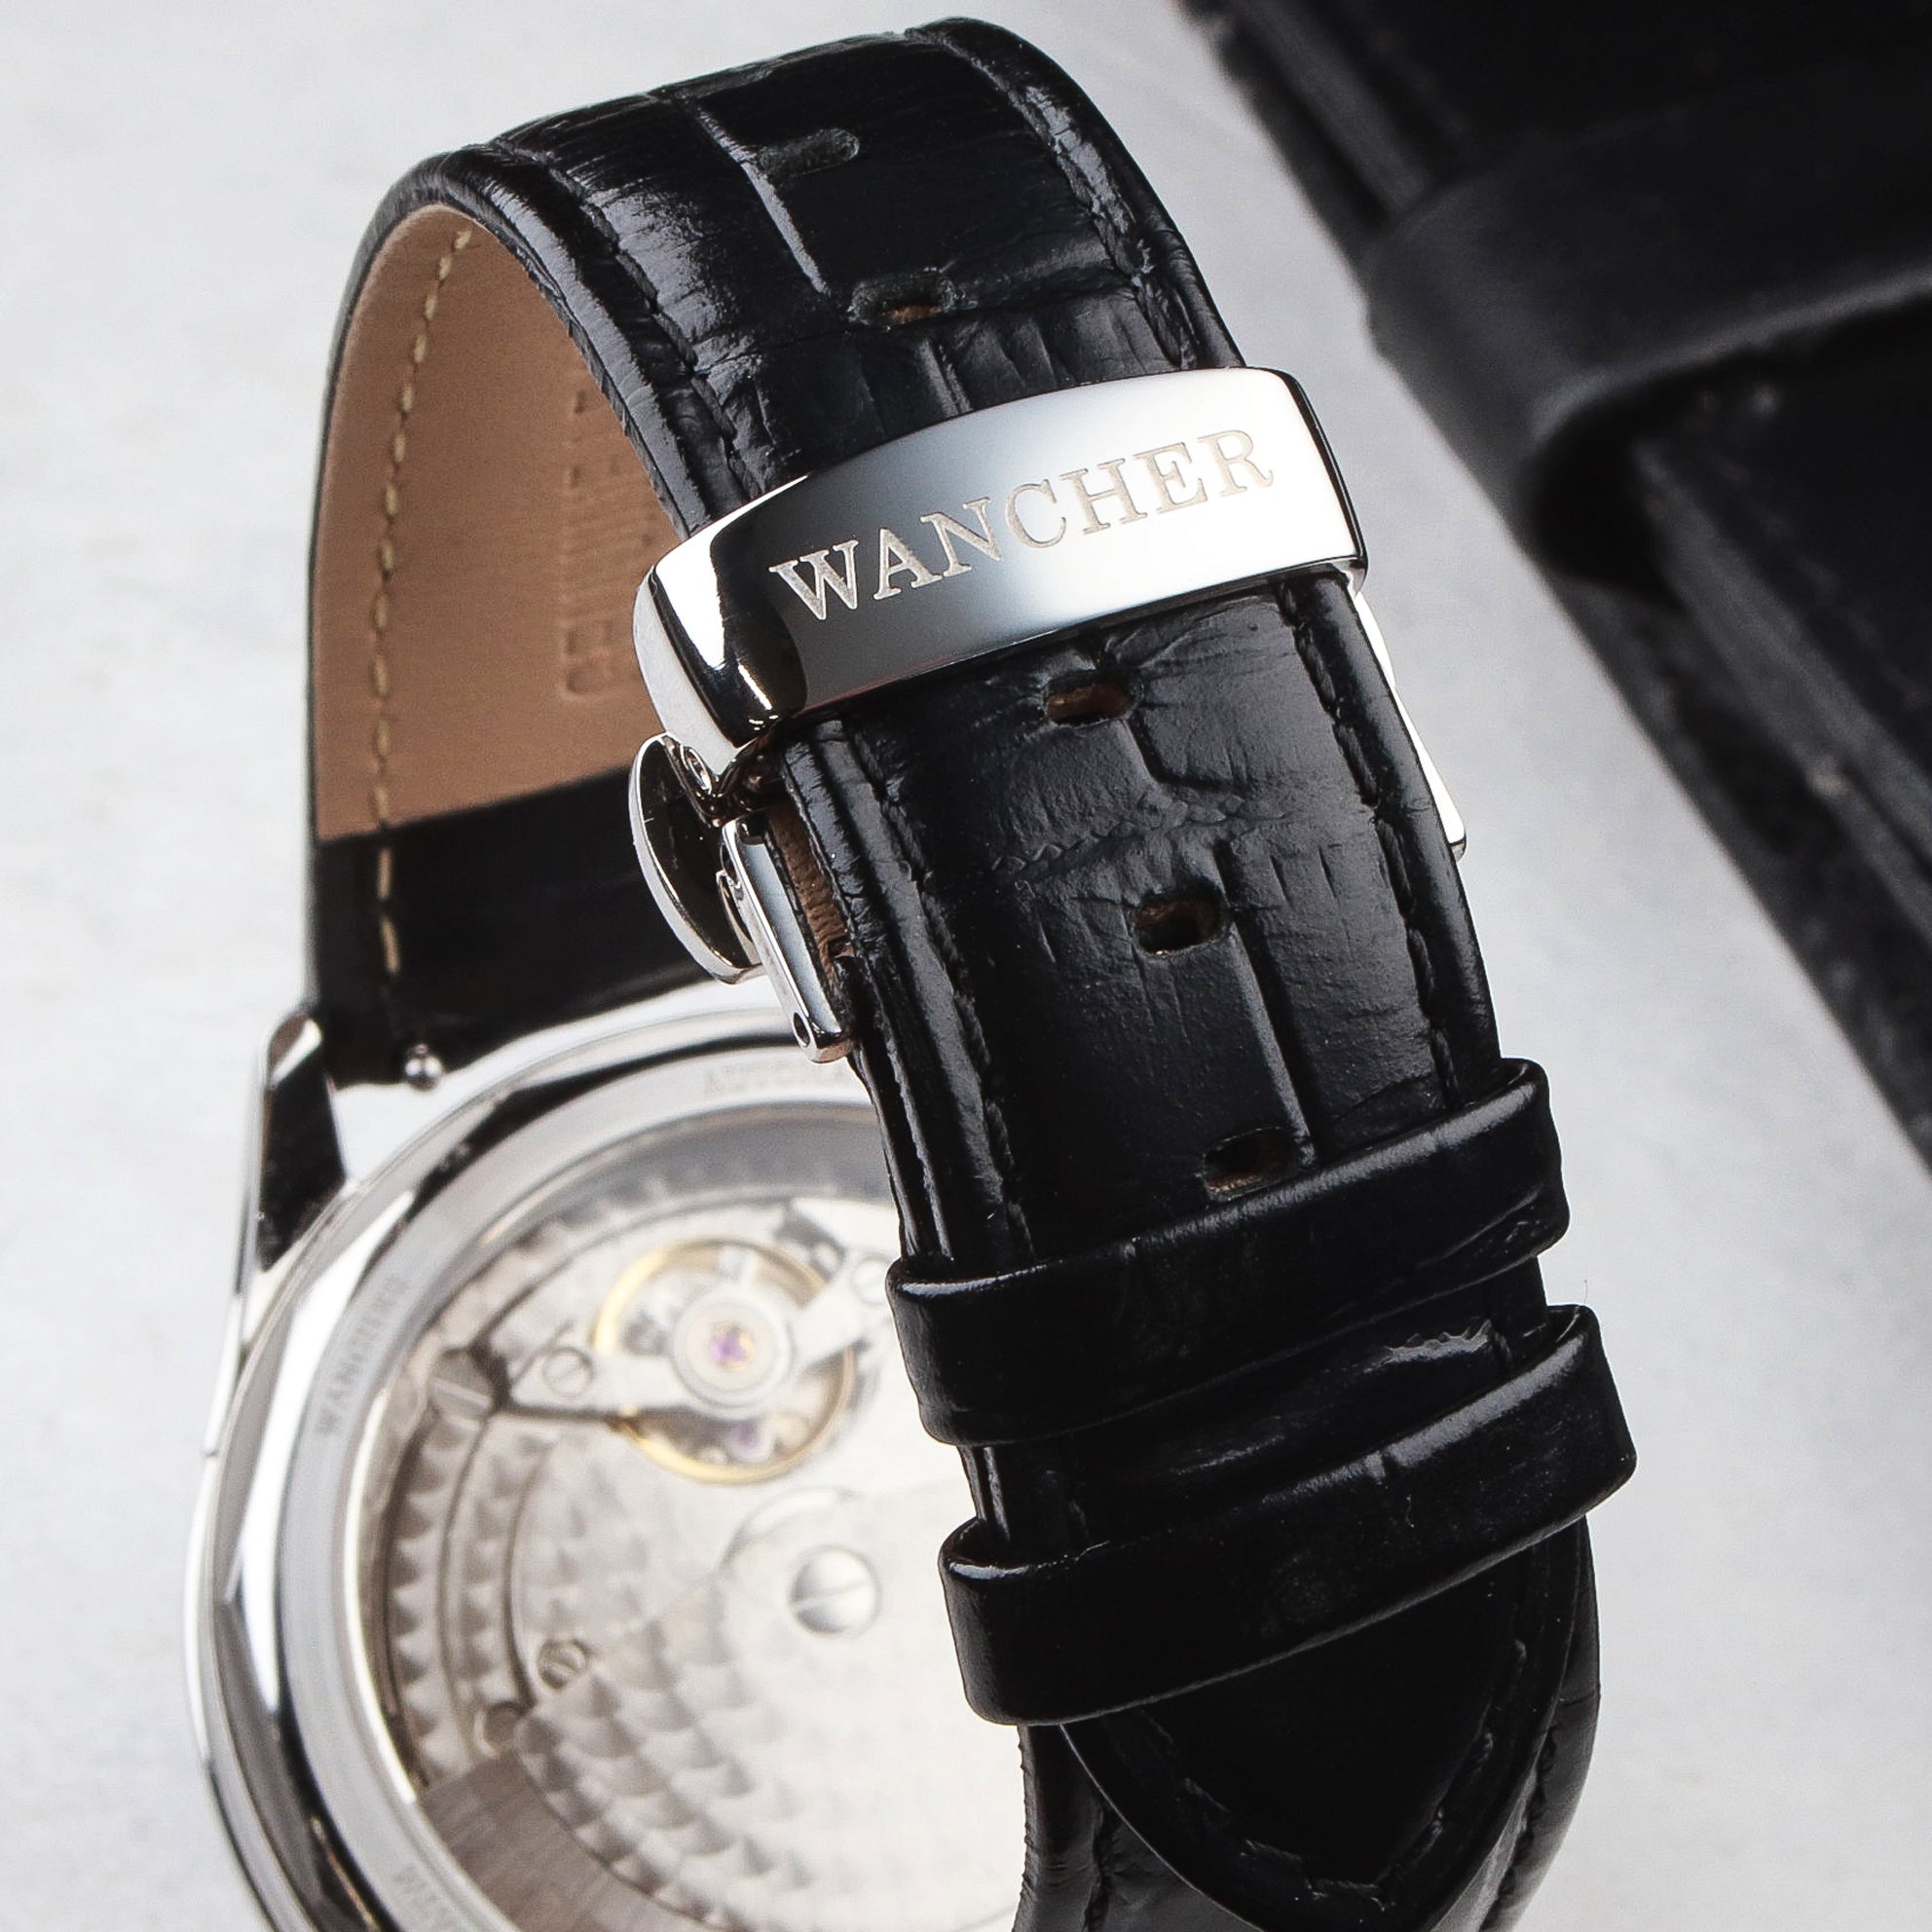 Italian Calfskin Leather Strap - Butterfly Buckle Clasp Type - Wancher Watch Wancher Watch Wancher Watch Italian Calfskin Leather Strap - Butterfly Buckle Clasp Type {{ Automatic Watch {{ Watch }} }} {{ Japan }} 上品な21mmラグ幅のイタリア製本物のレザーストラップには蝶々の留め具が付いています。この豪華なアクセサリーであなたの時計を引き立てましょう